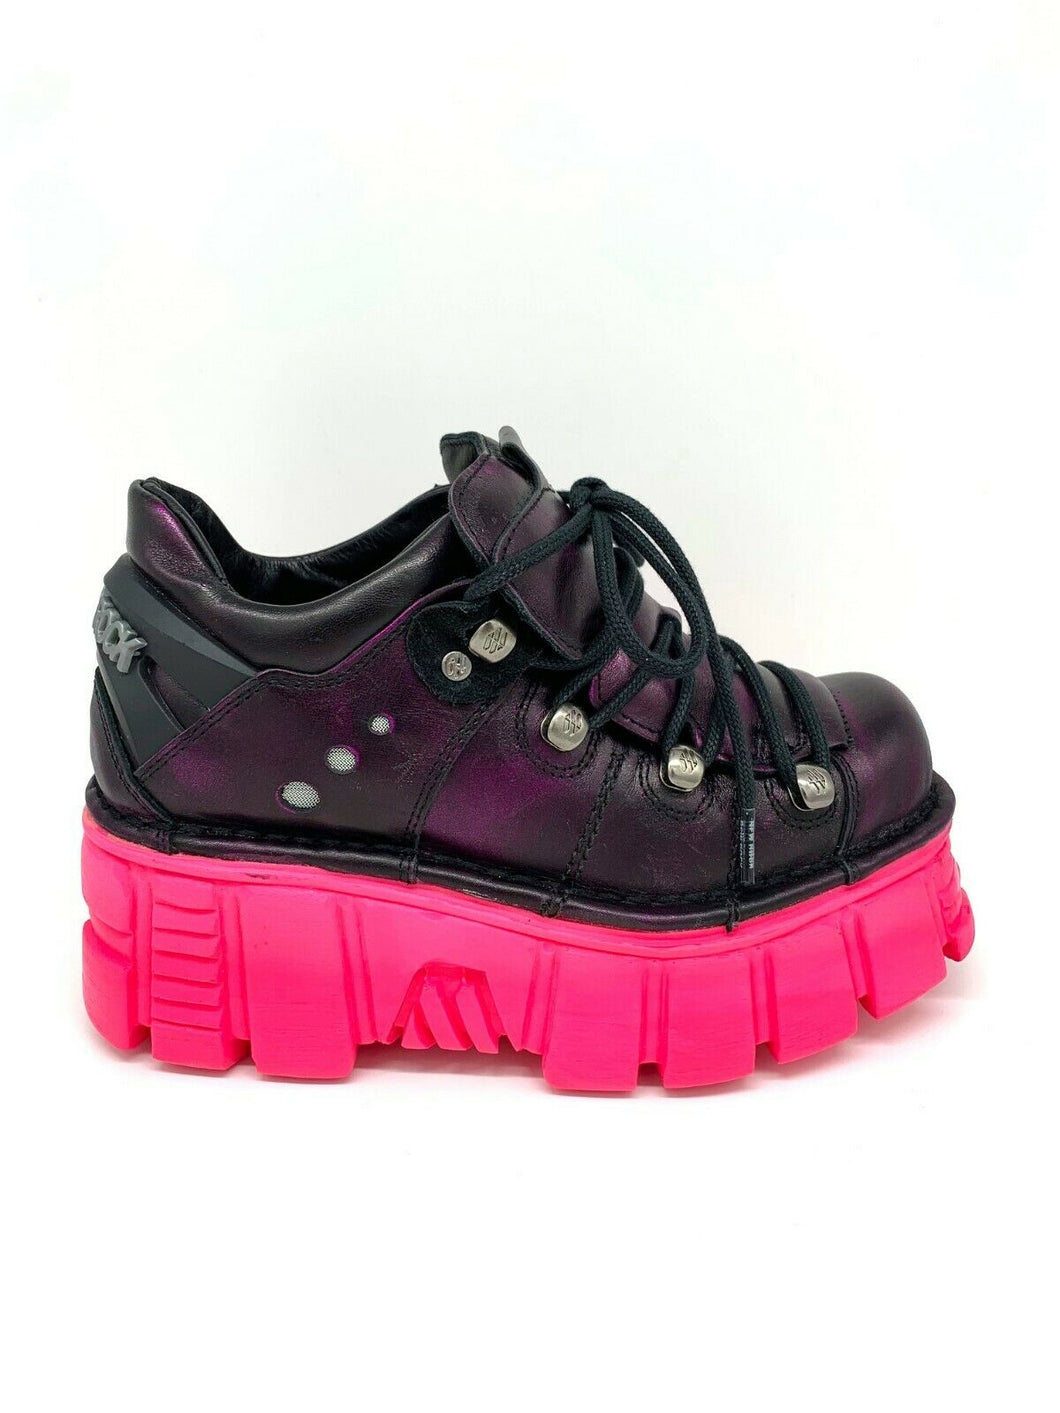 New Rock Schuhe Shoes Boots Designer Lila Metallic Platform Fashion Tower Sole